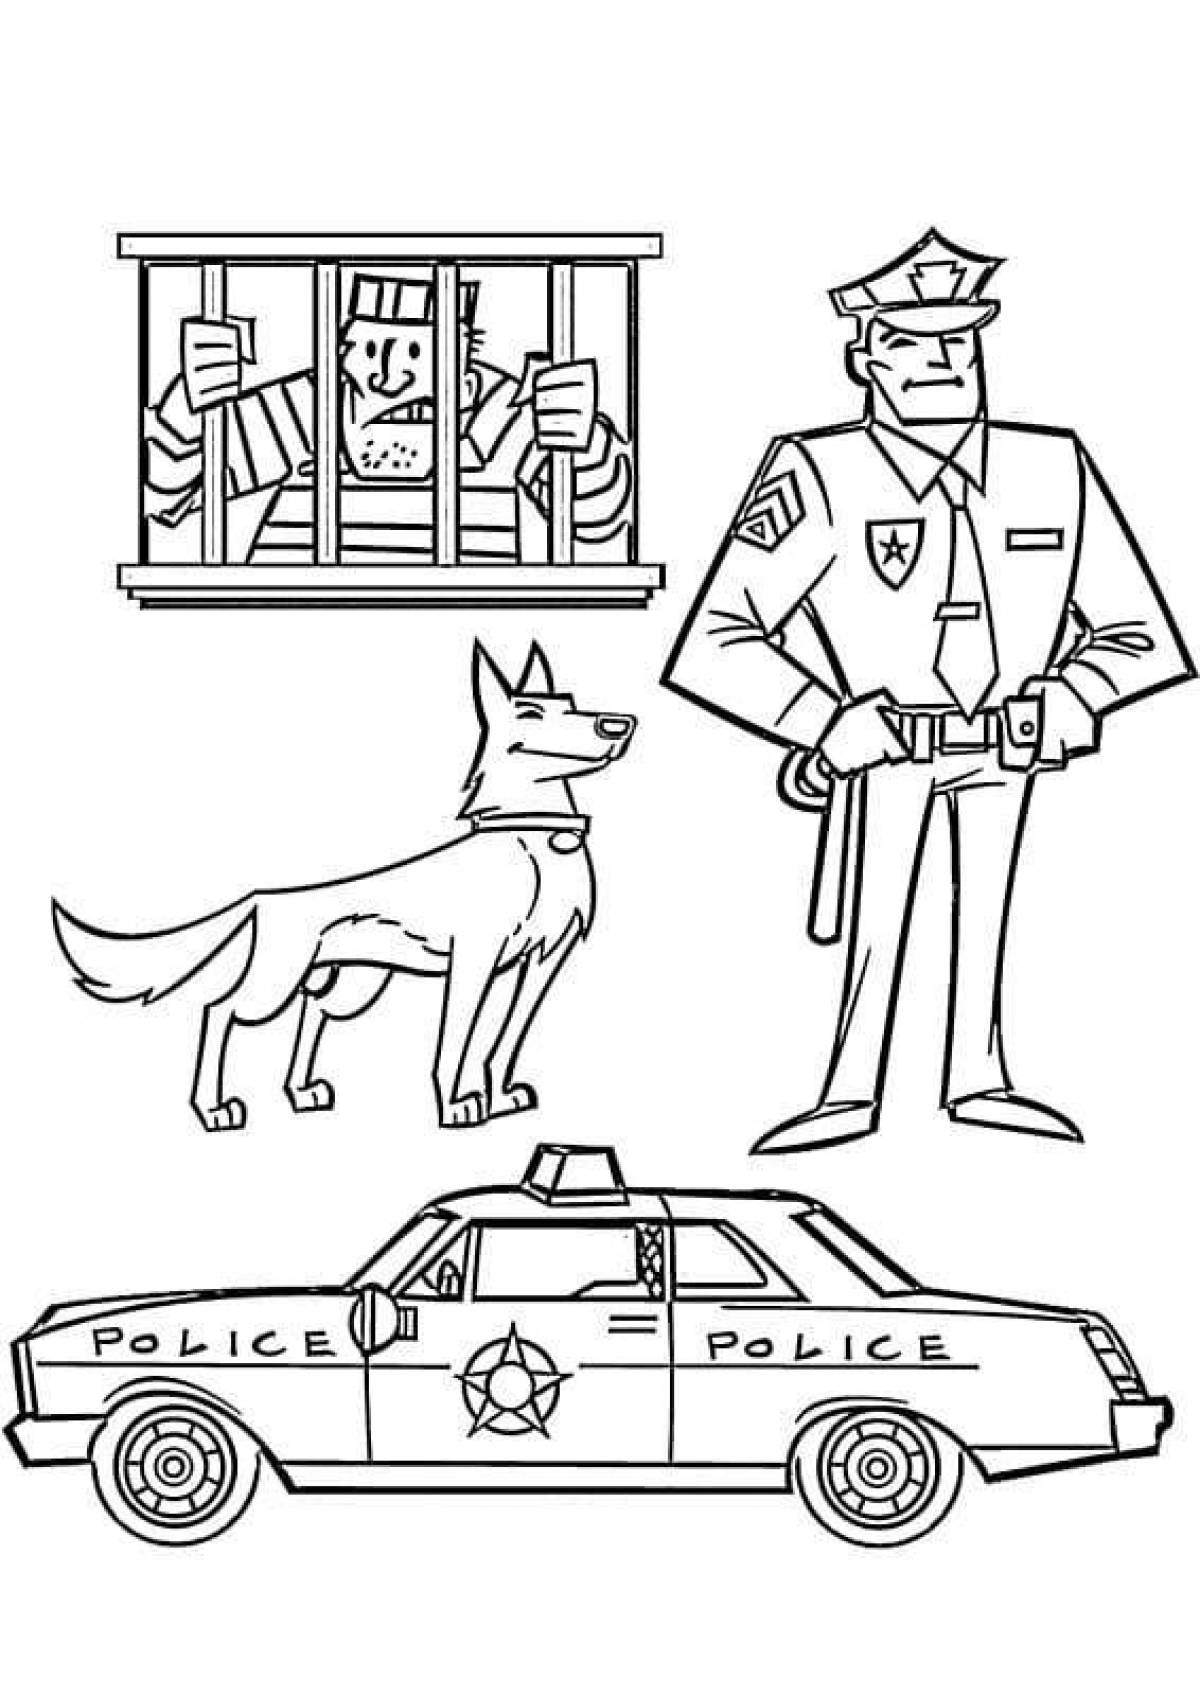 Loyal police dog coloring page